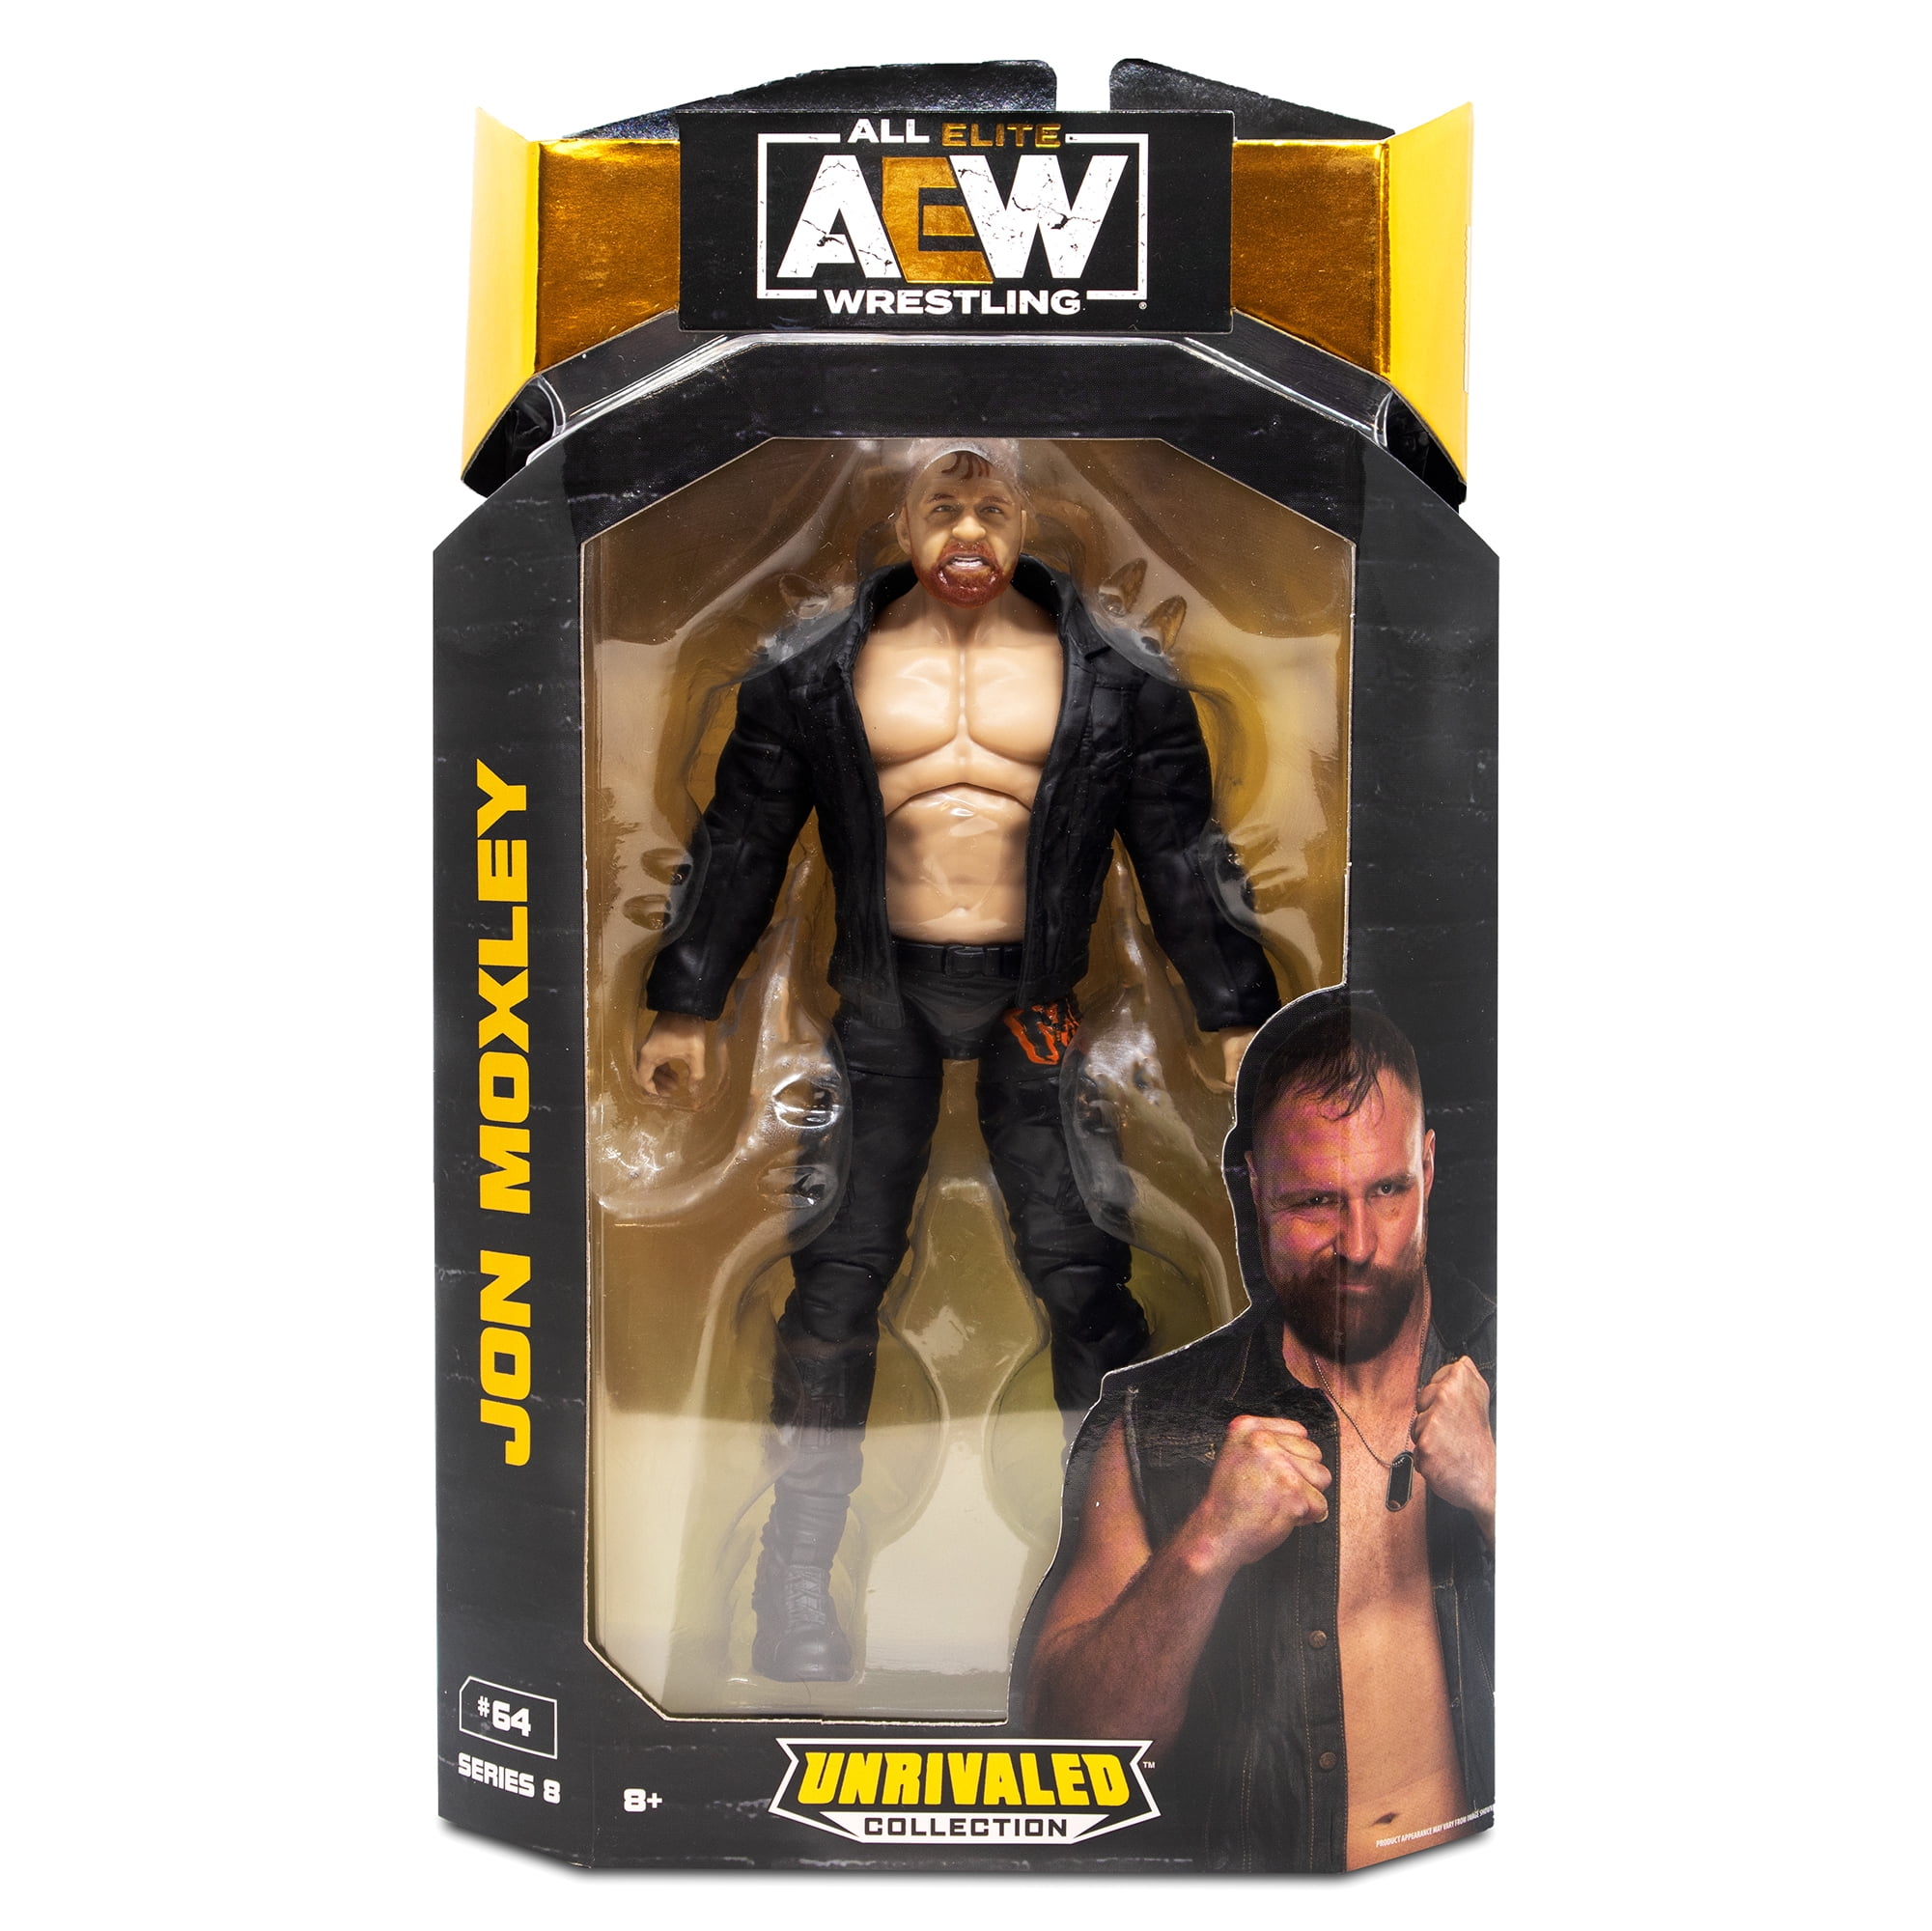 Jon Moxley - AEW Unrivaled 8 Jazwares AEW Toy Wrestling Action Figure 